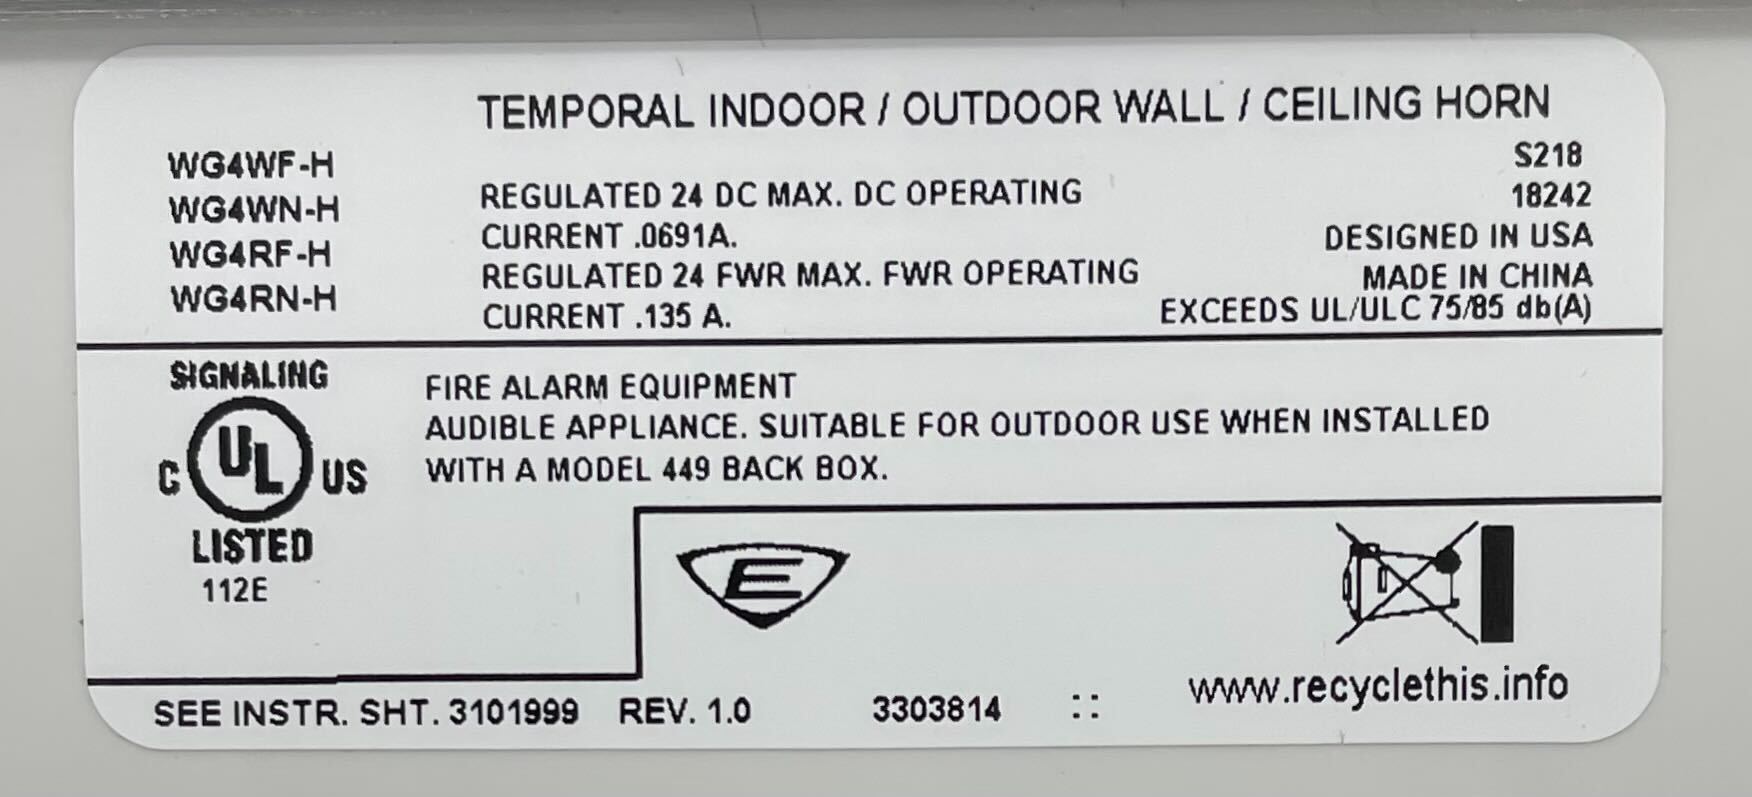 Edwards WG4WF-H - The Fire Alarm Supplier